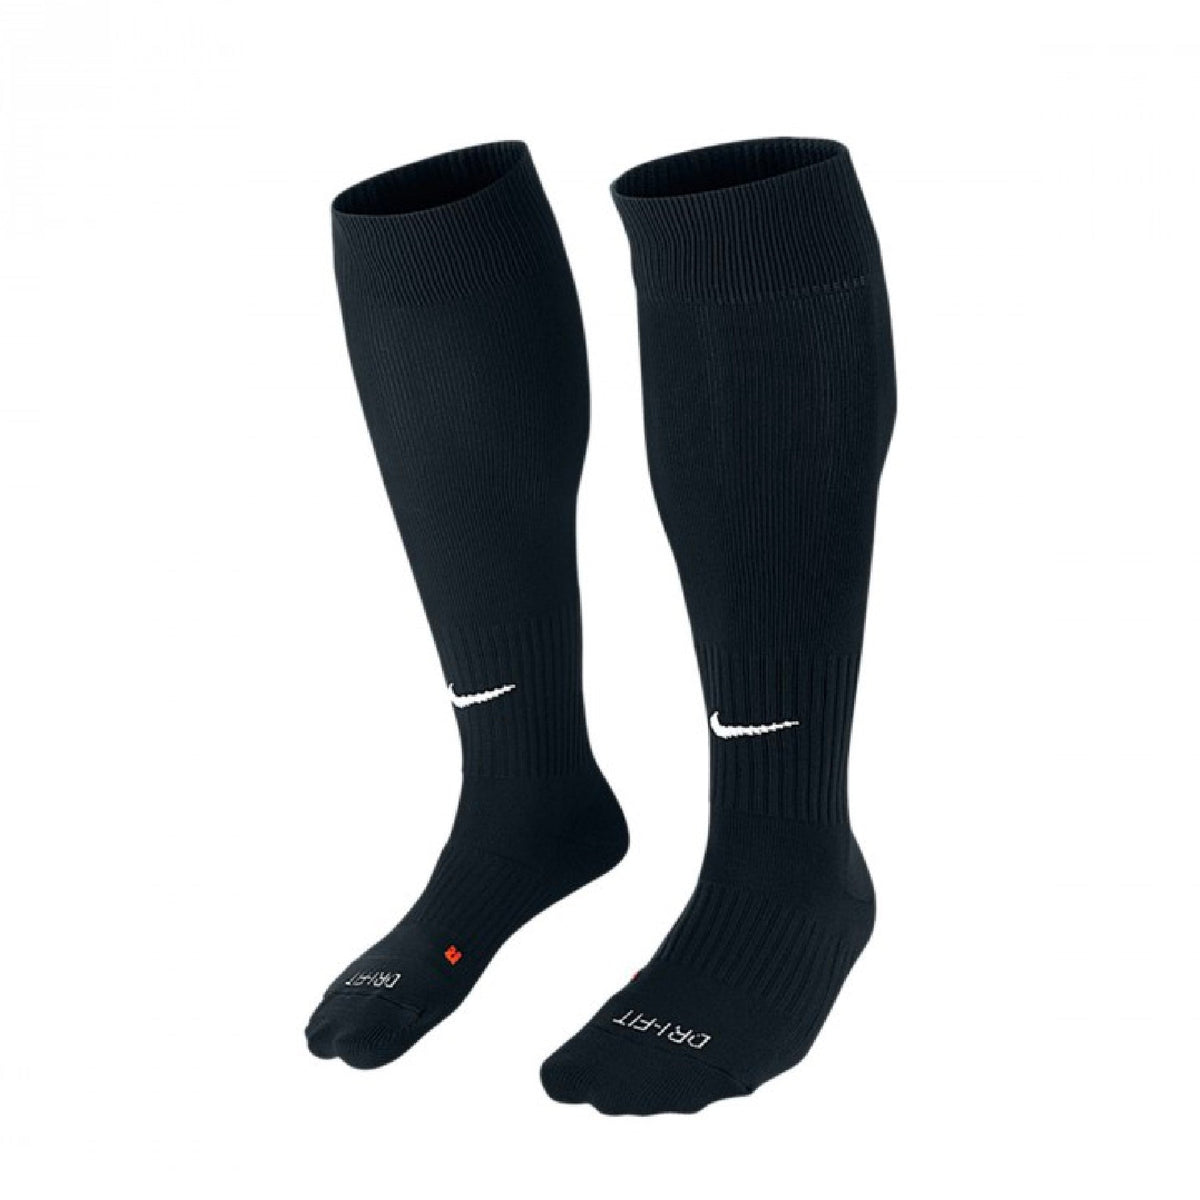 PSA North Nike Classic II Sock Volt – Soccer Zone USA